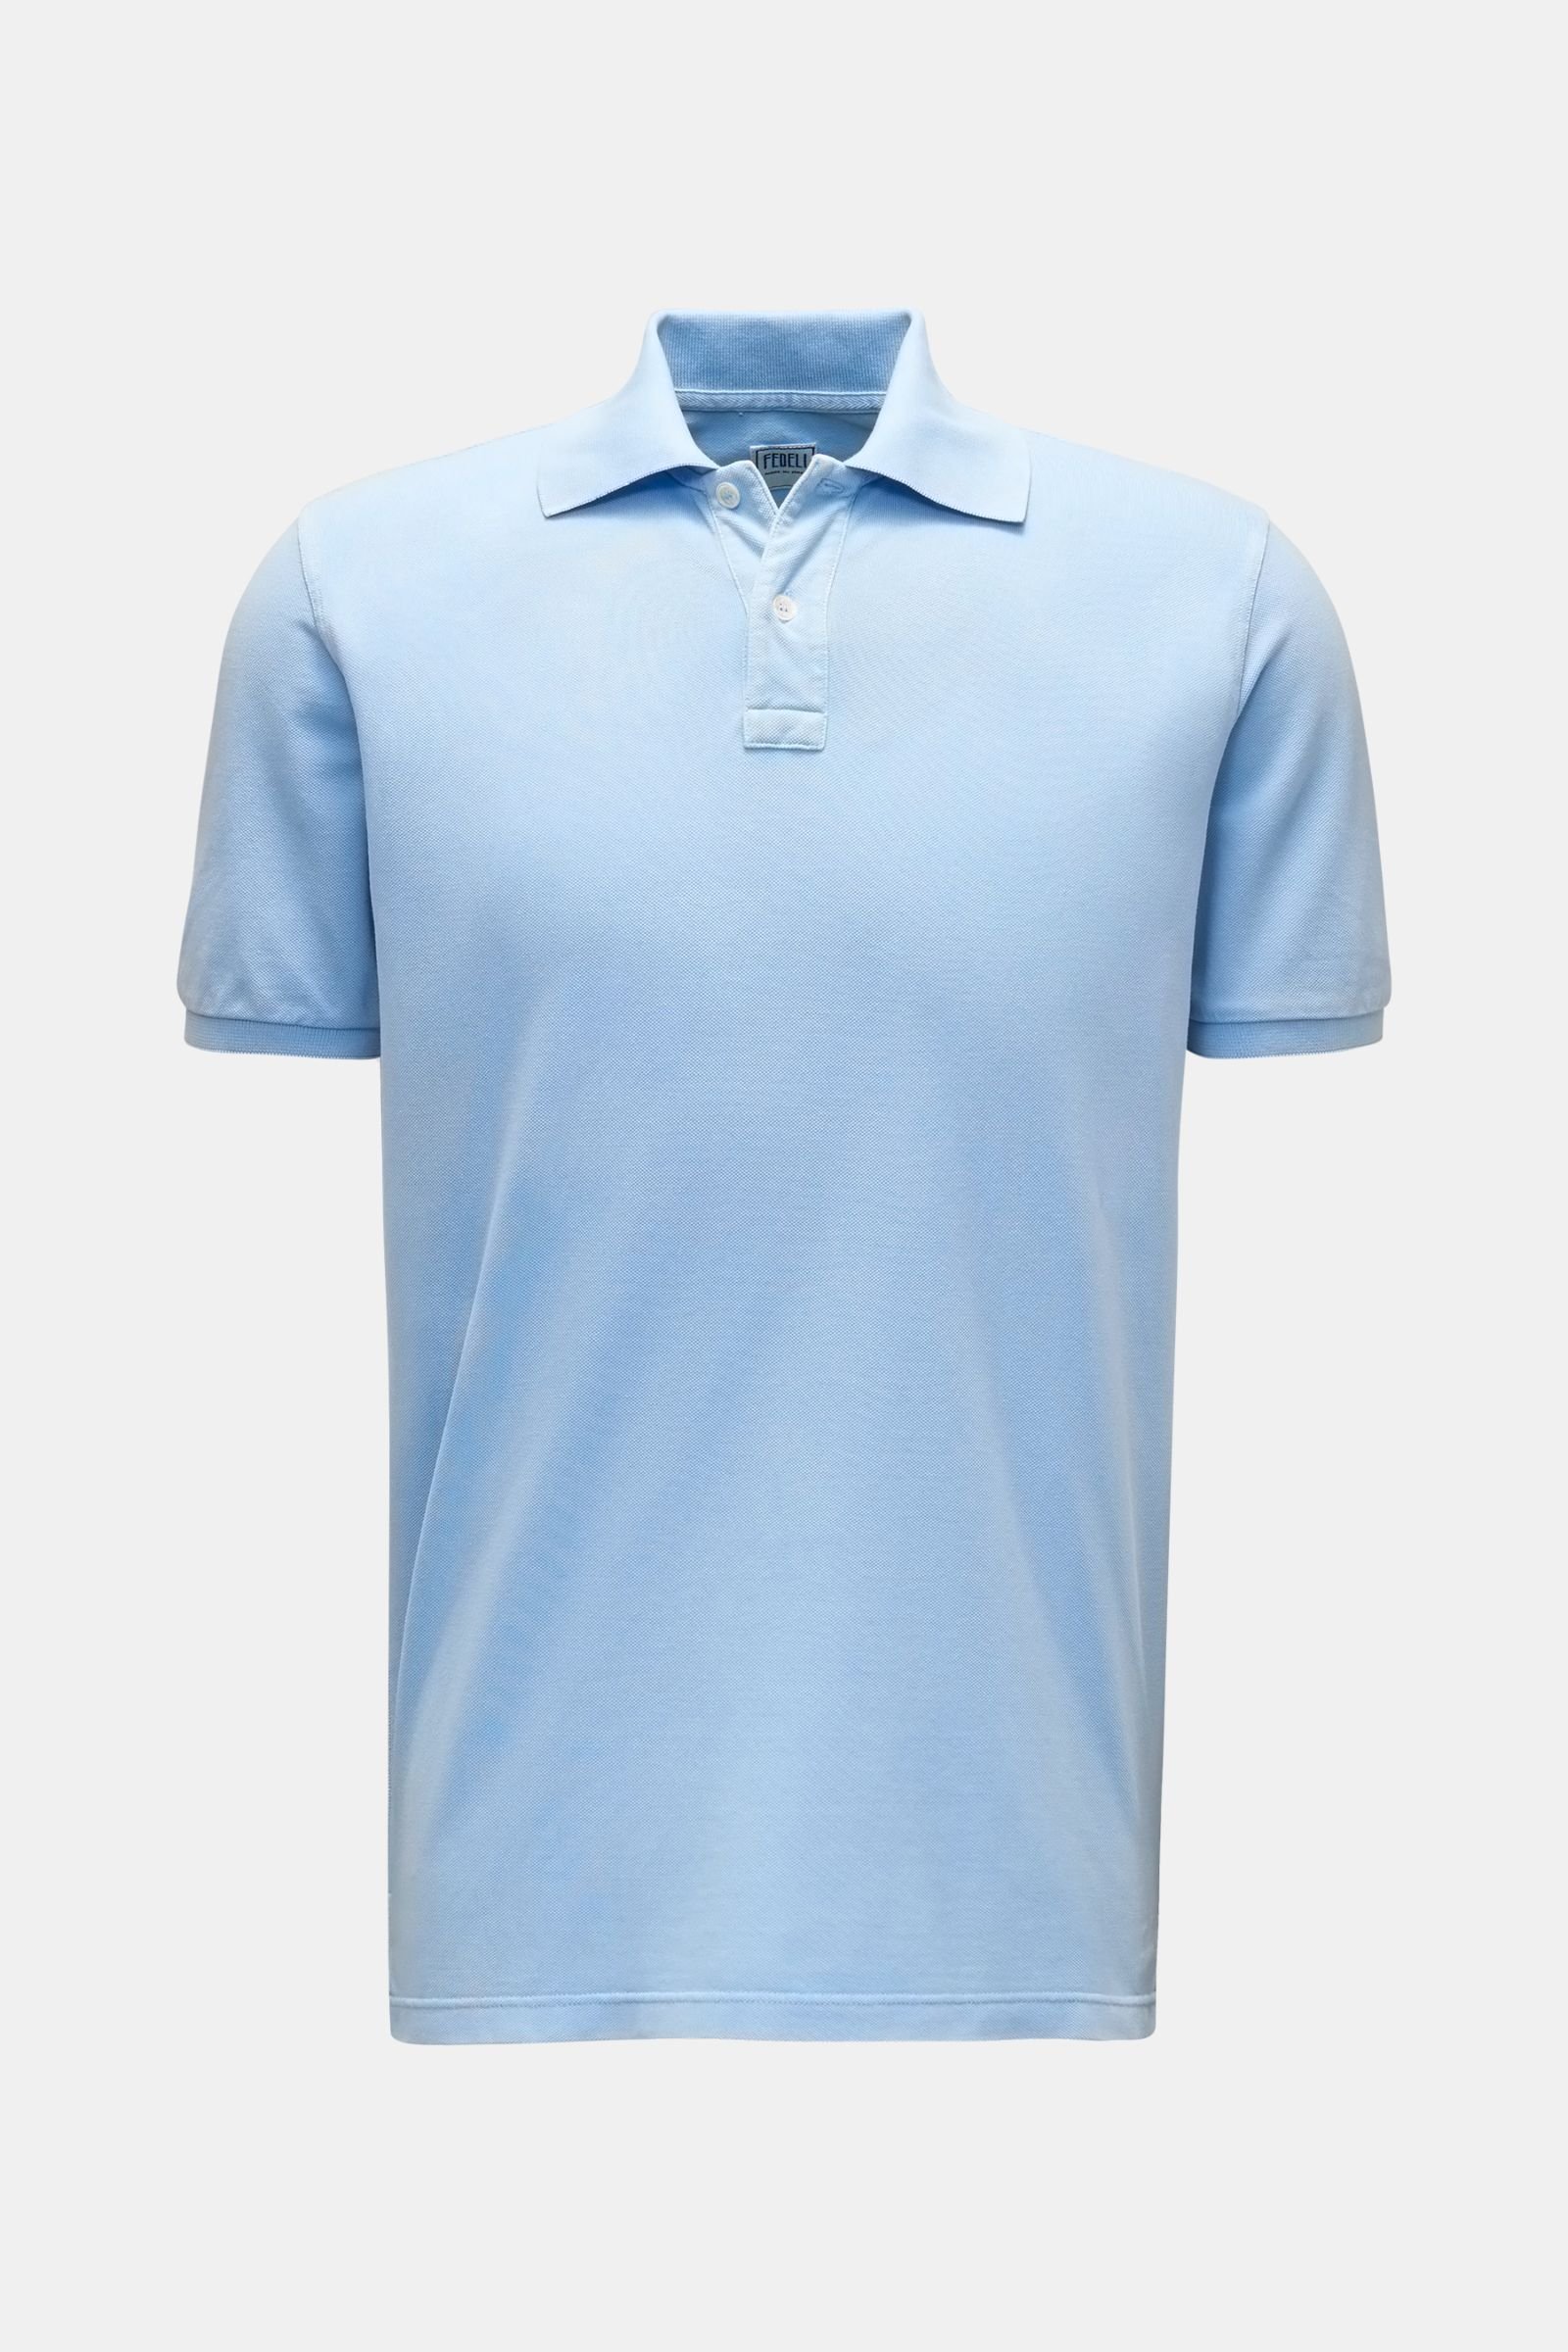 Polo shirt 'West' light blue